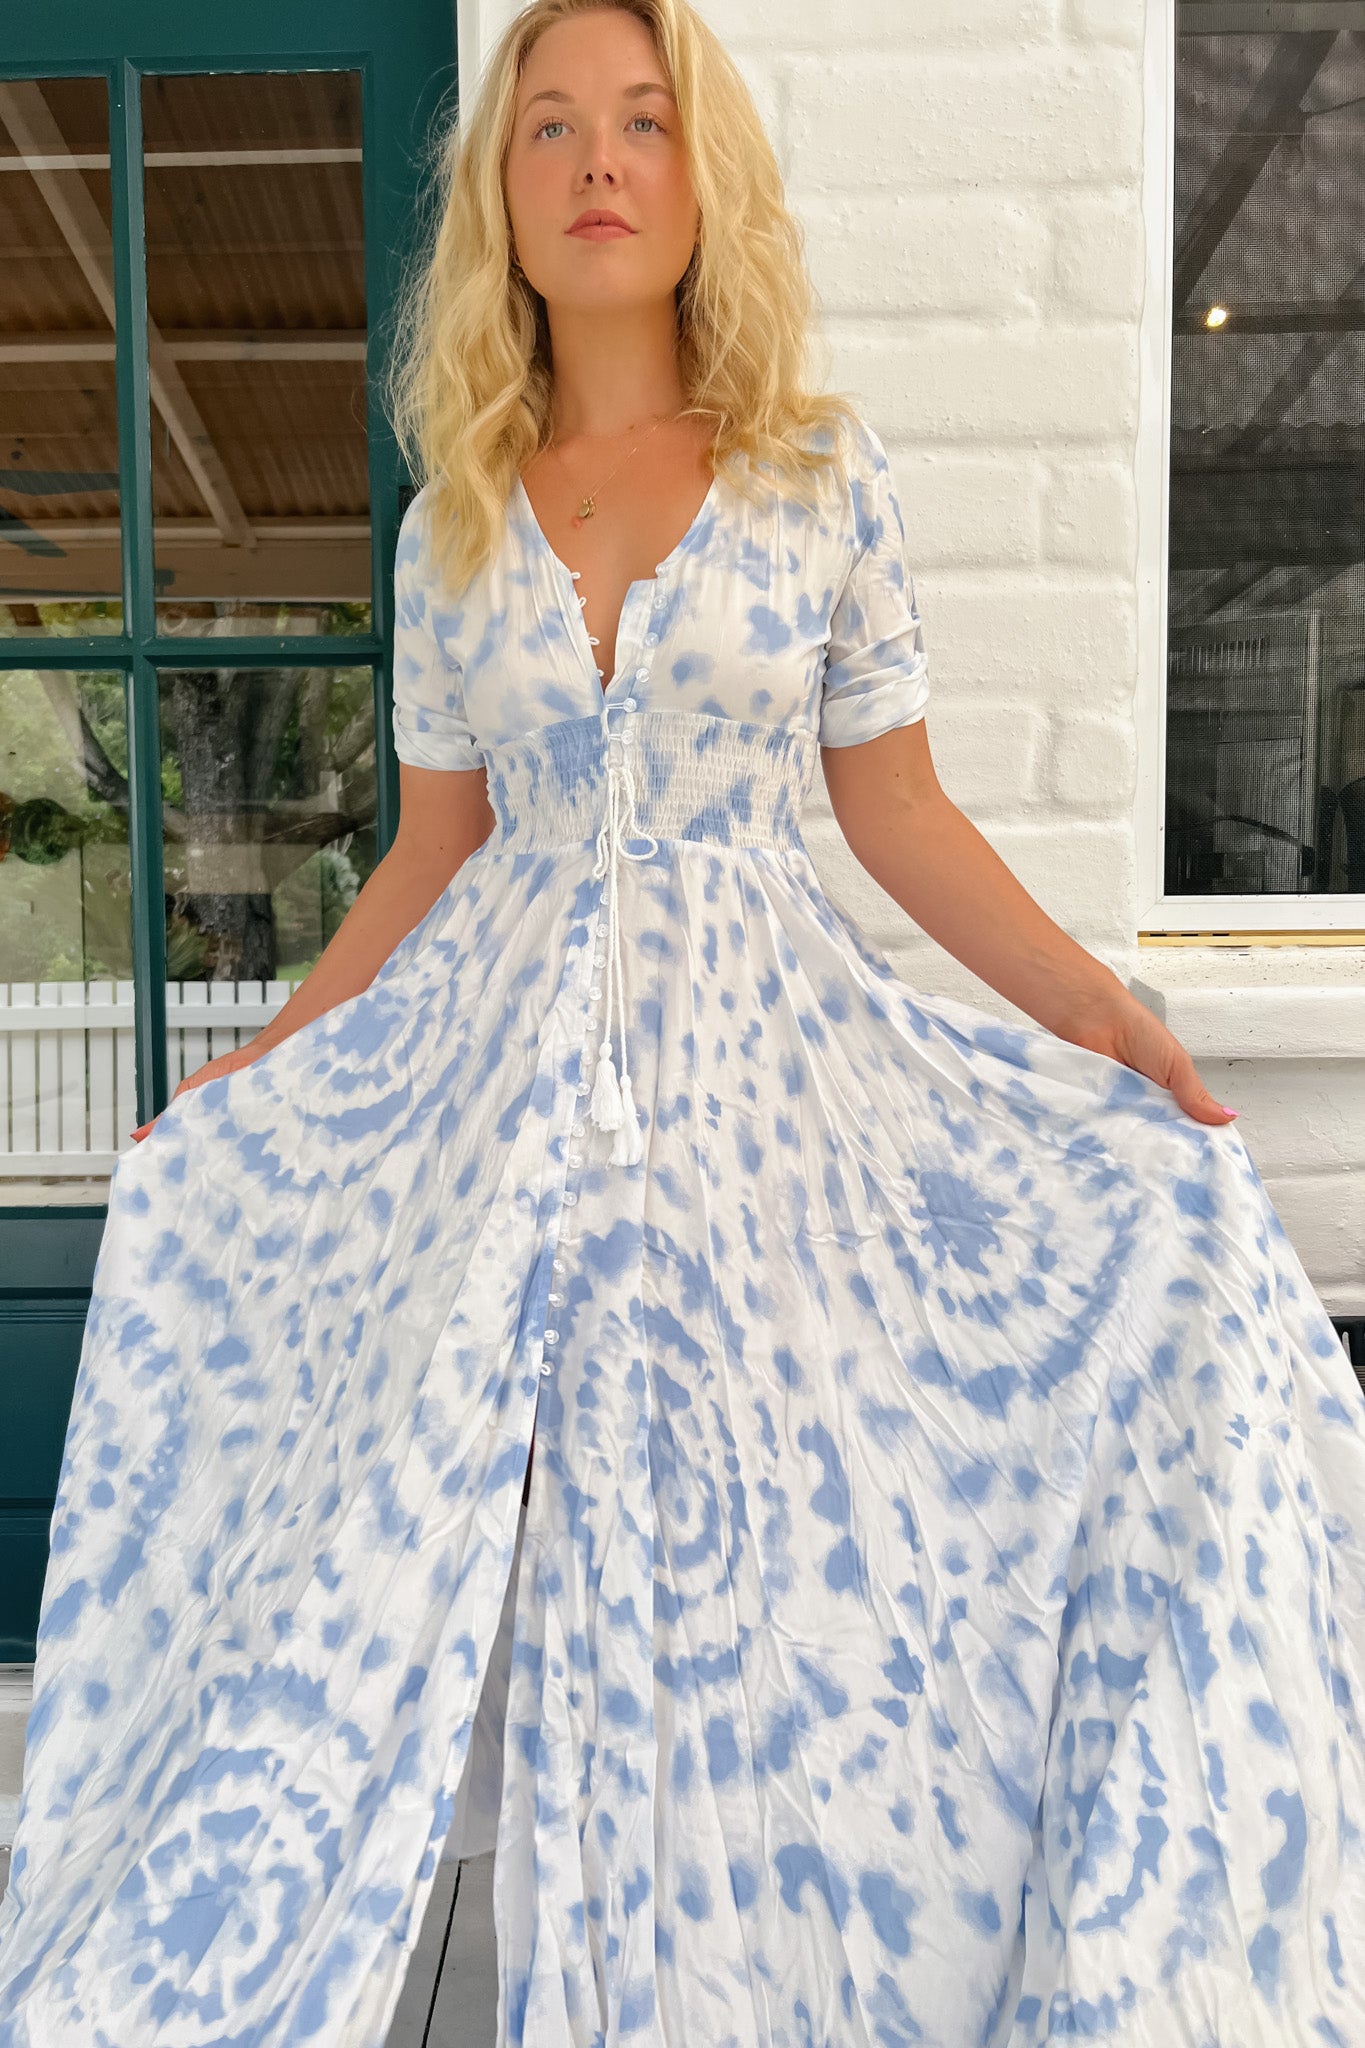 JAASE - Indiana Maxi Dress: Lace Back Shirred Waist A Line Dress with Handkercheif Hemline in Nine Cloud Print